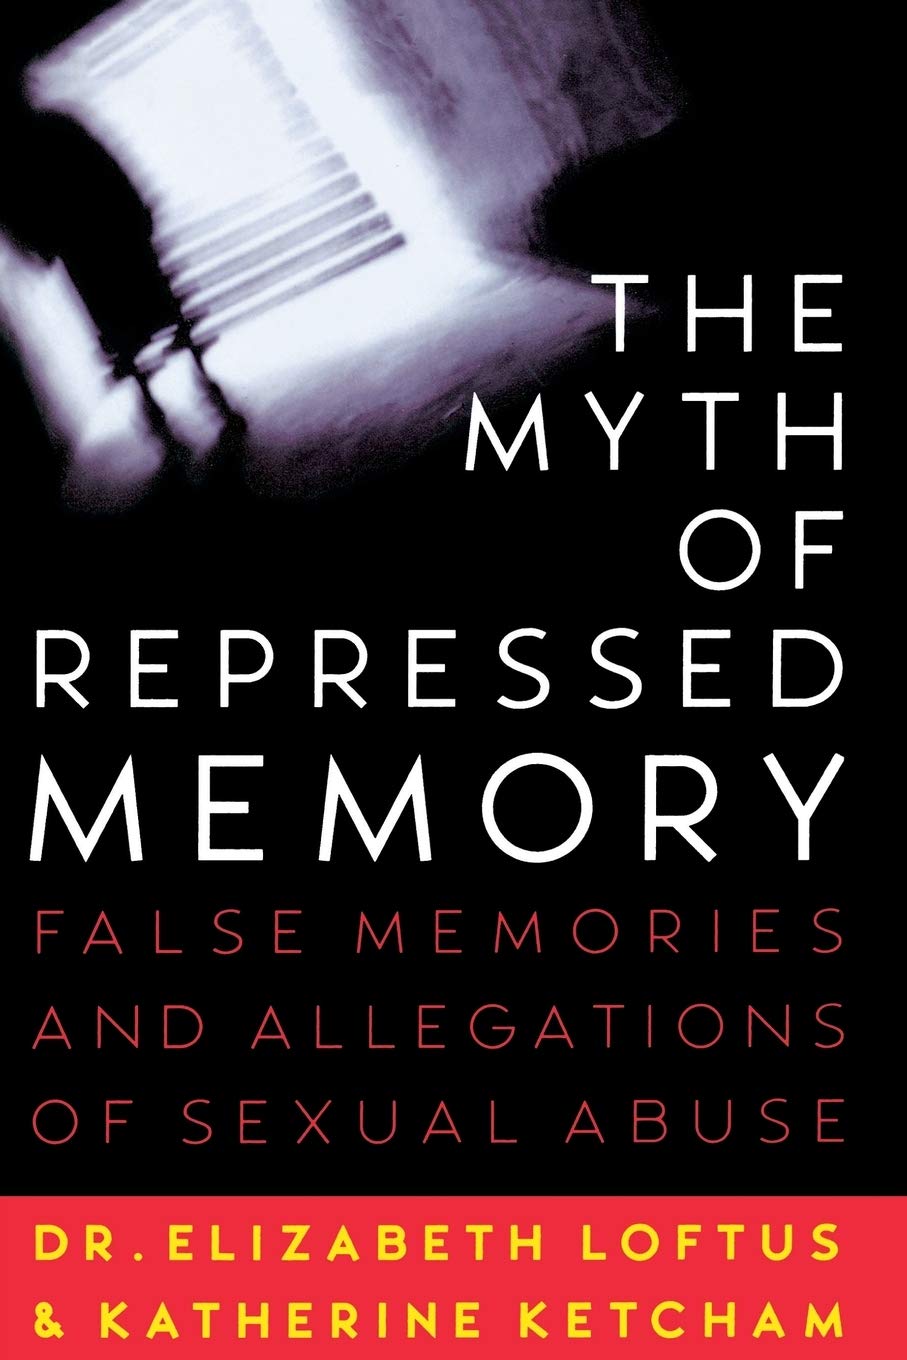 The myth of repressed memory